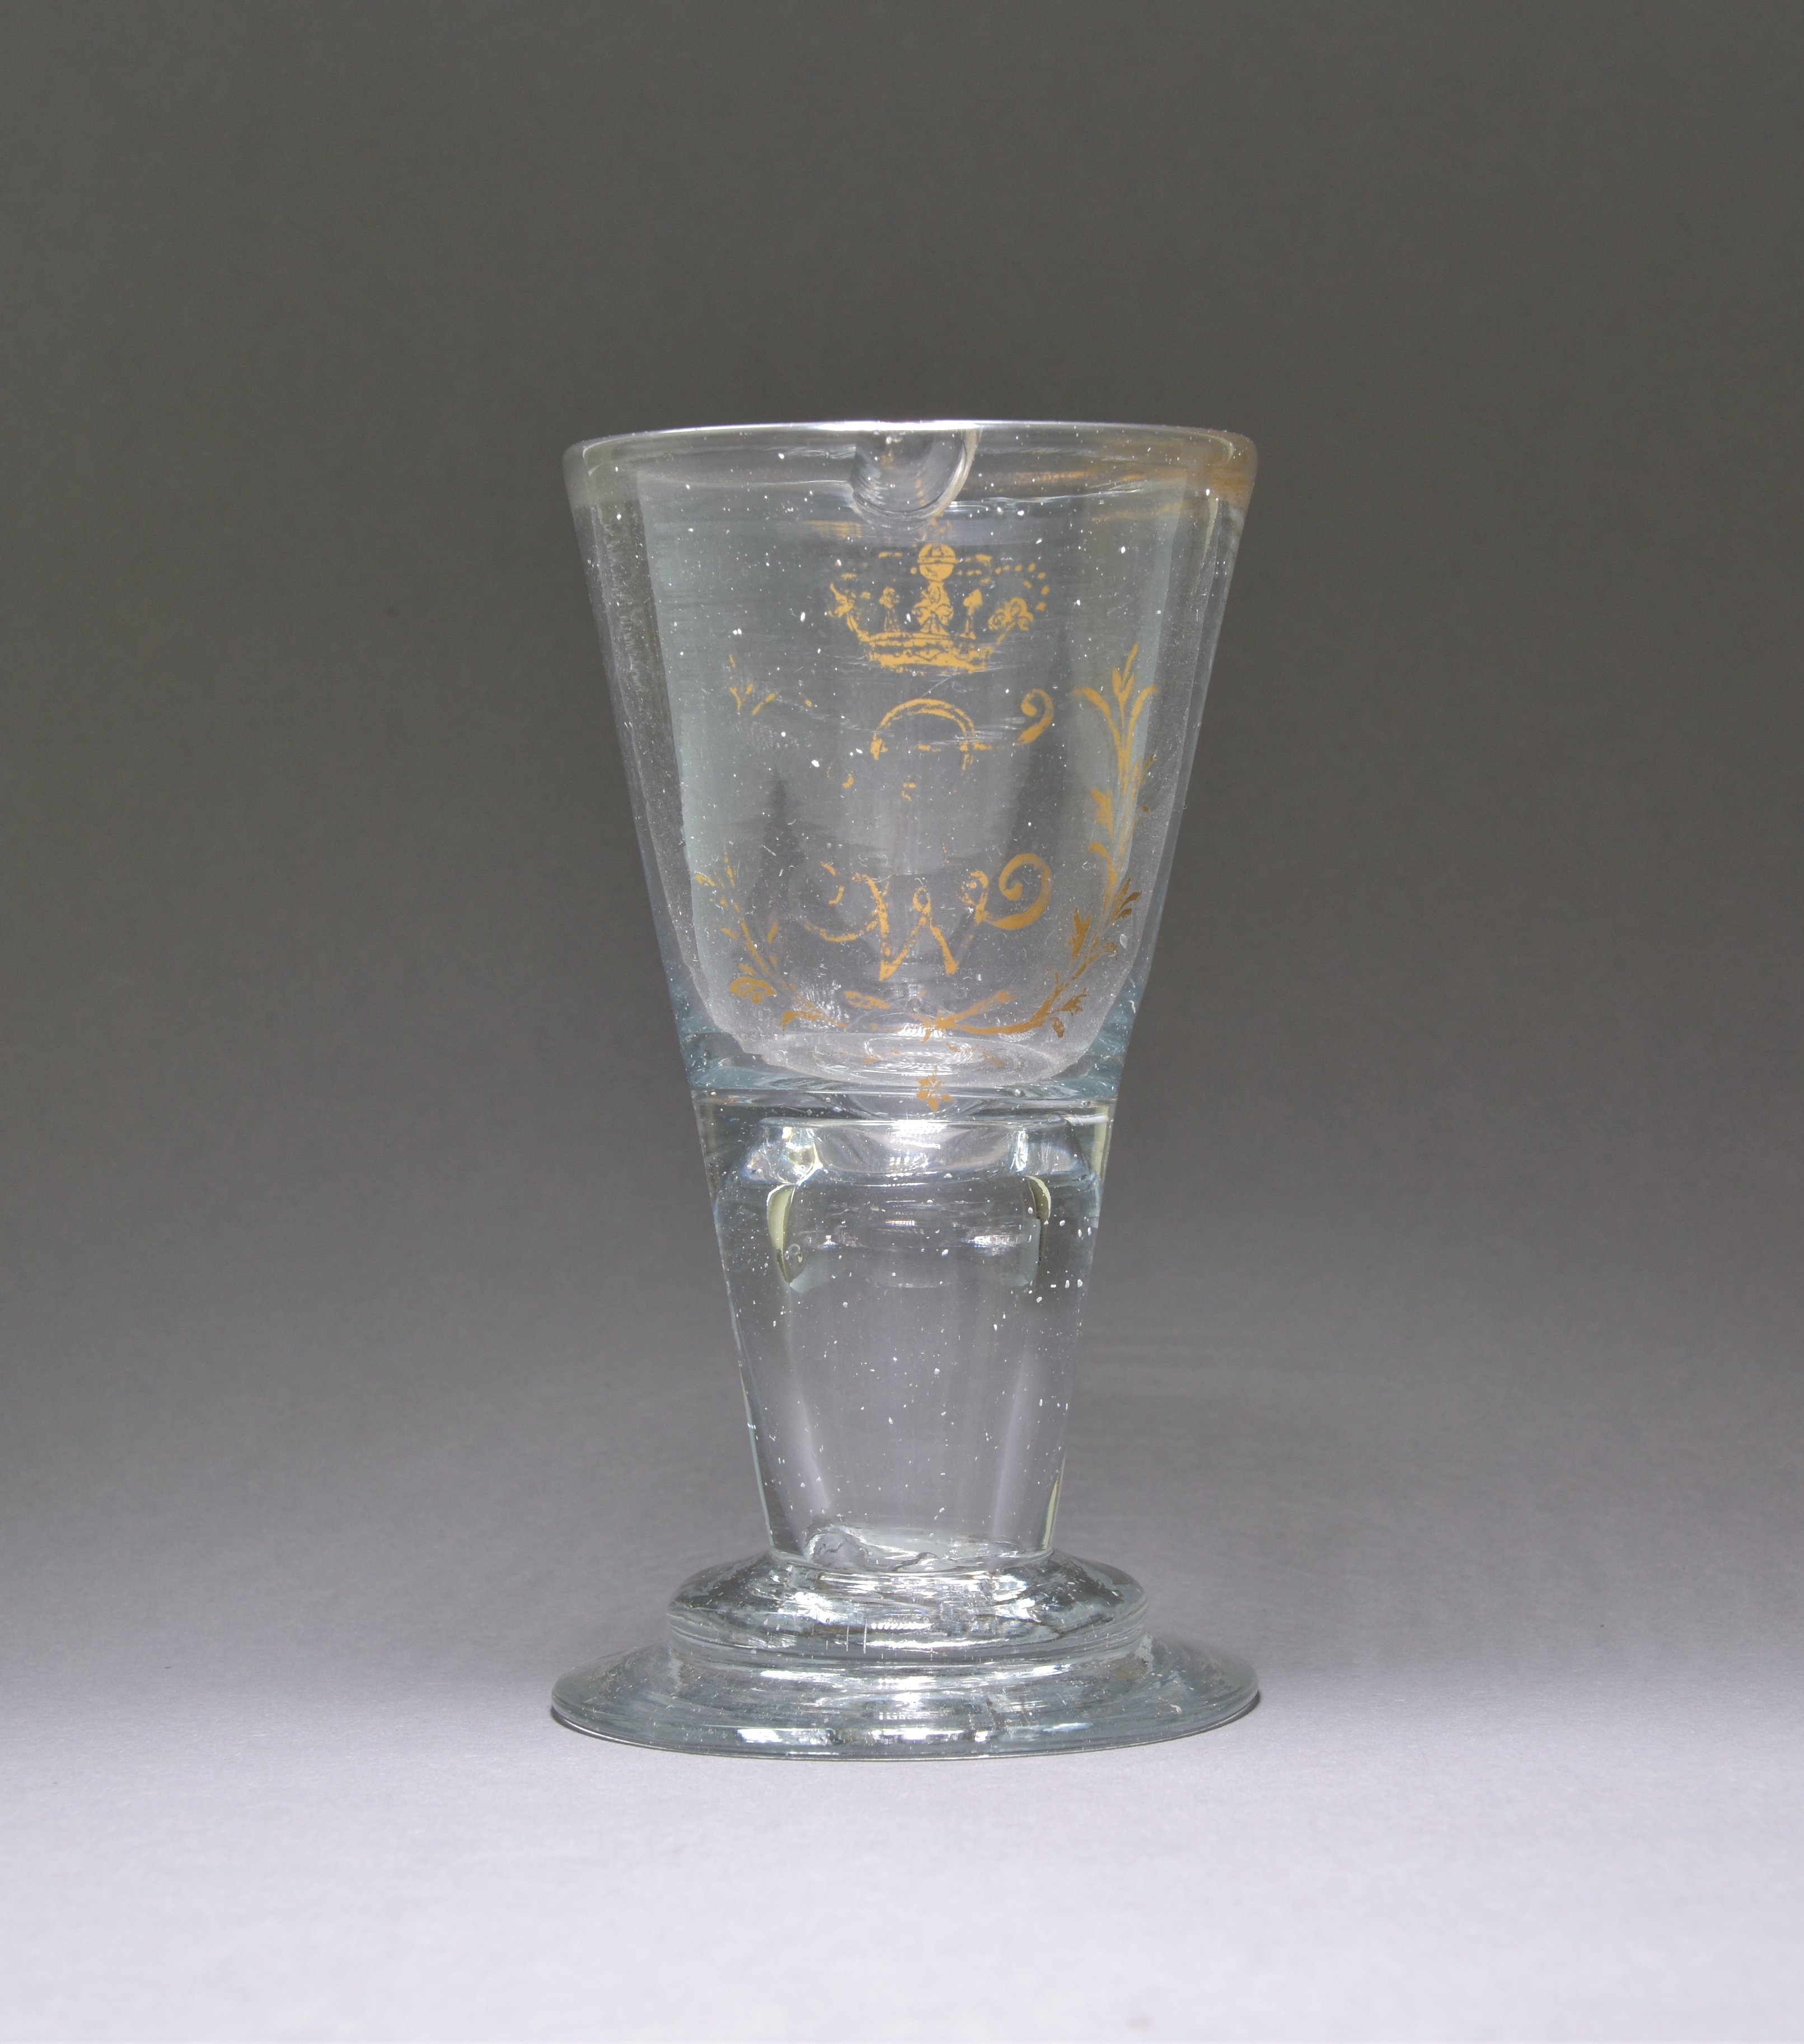 Branntweinglas "Wachtmeister" mit Monogramm FWR (Museum Neuruppin CC BY-NC-SA)